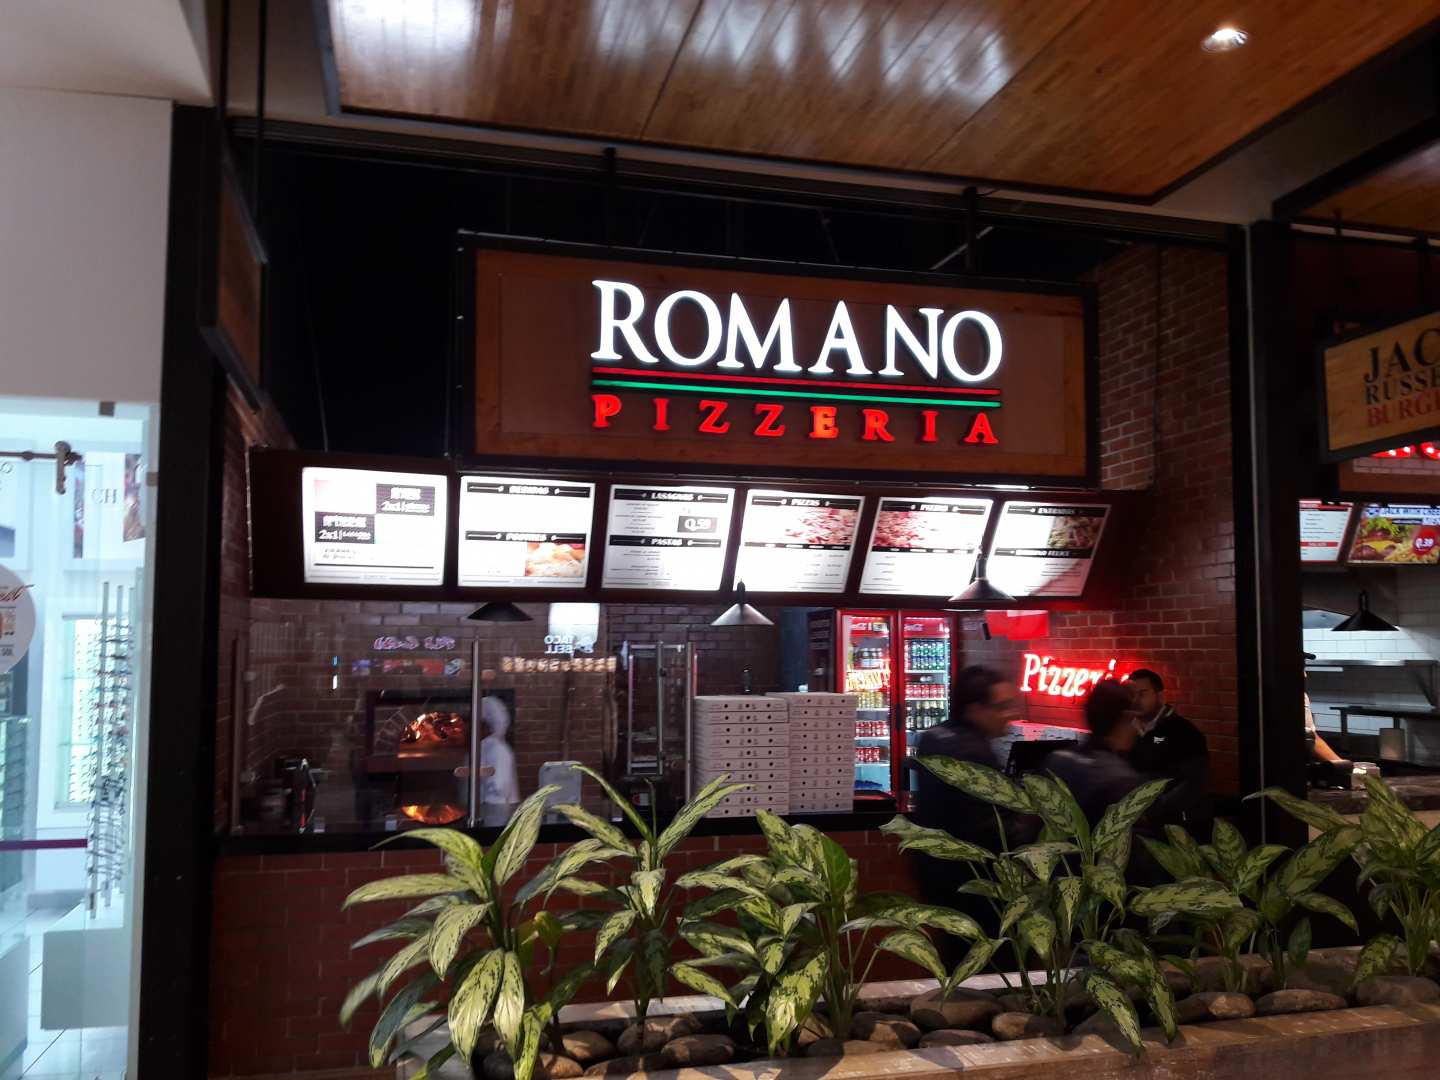 Romano Pizzeria (Parque Las Américas)